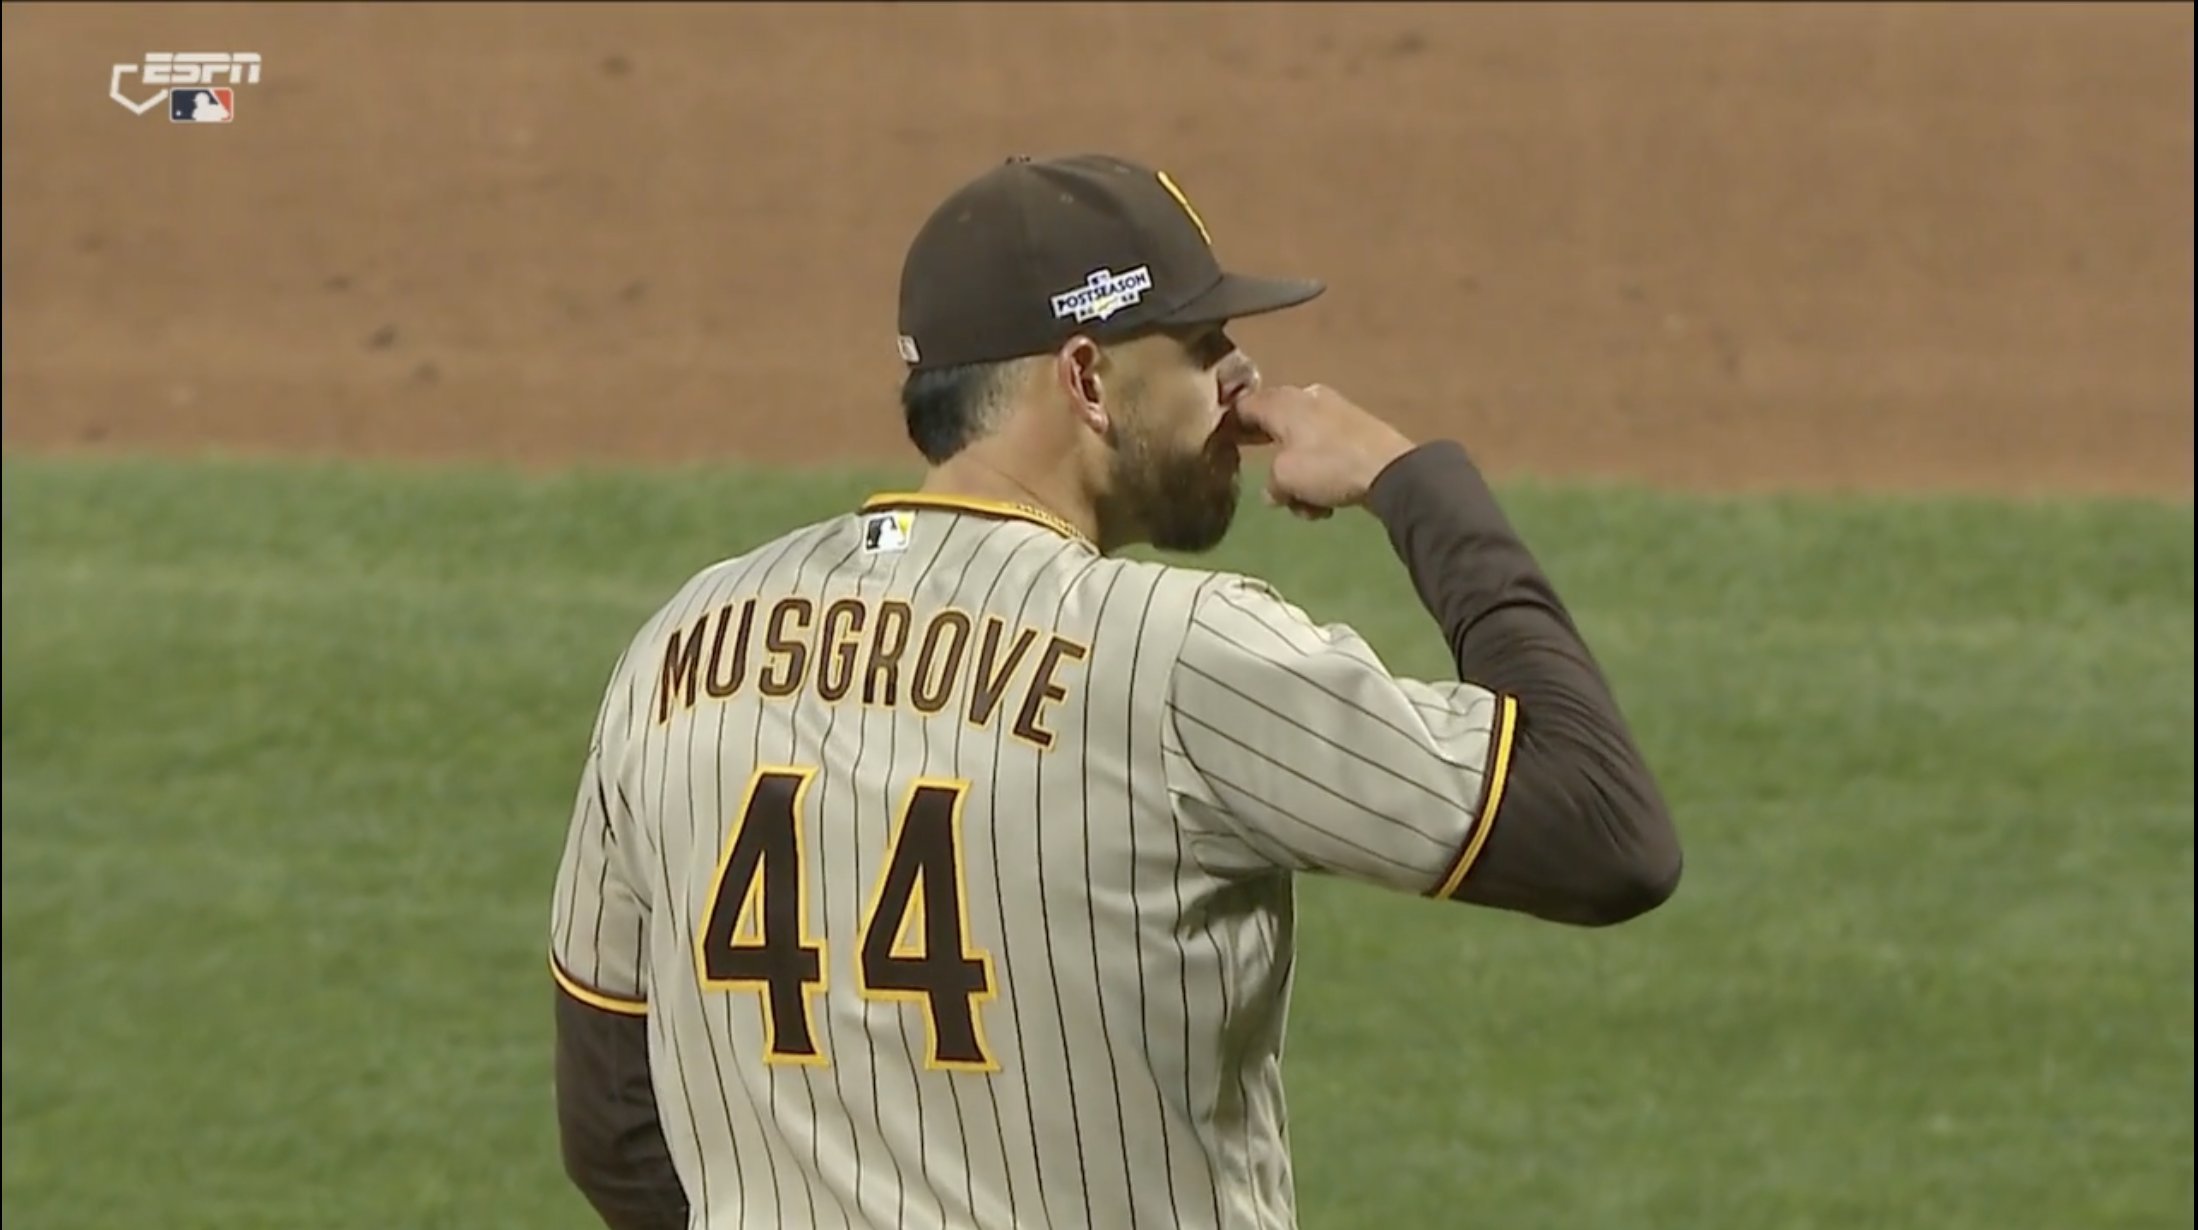 FOX Sports: MLB on X: Joe Musgrove just gestured to the Mets